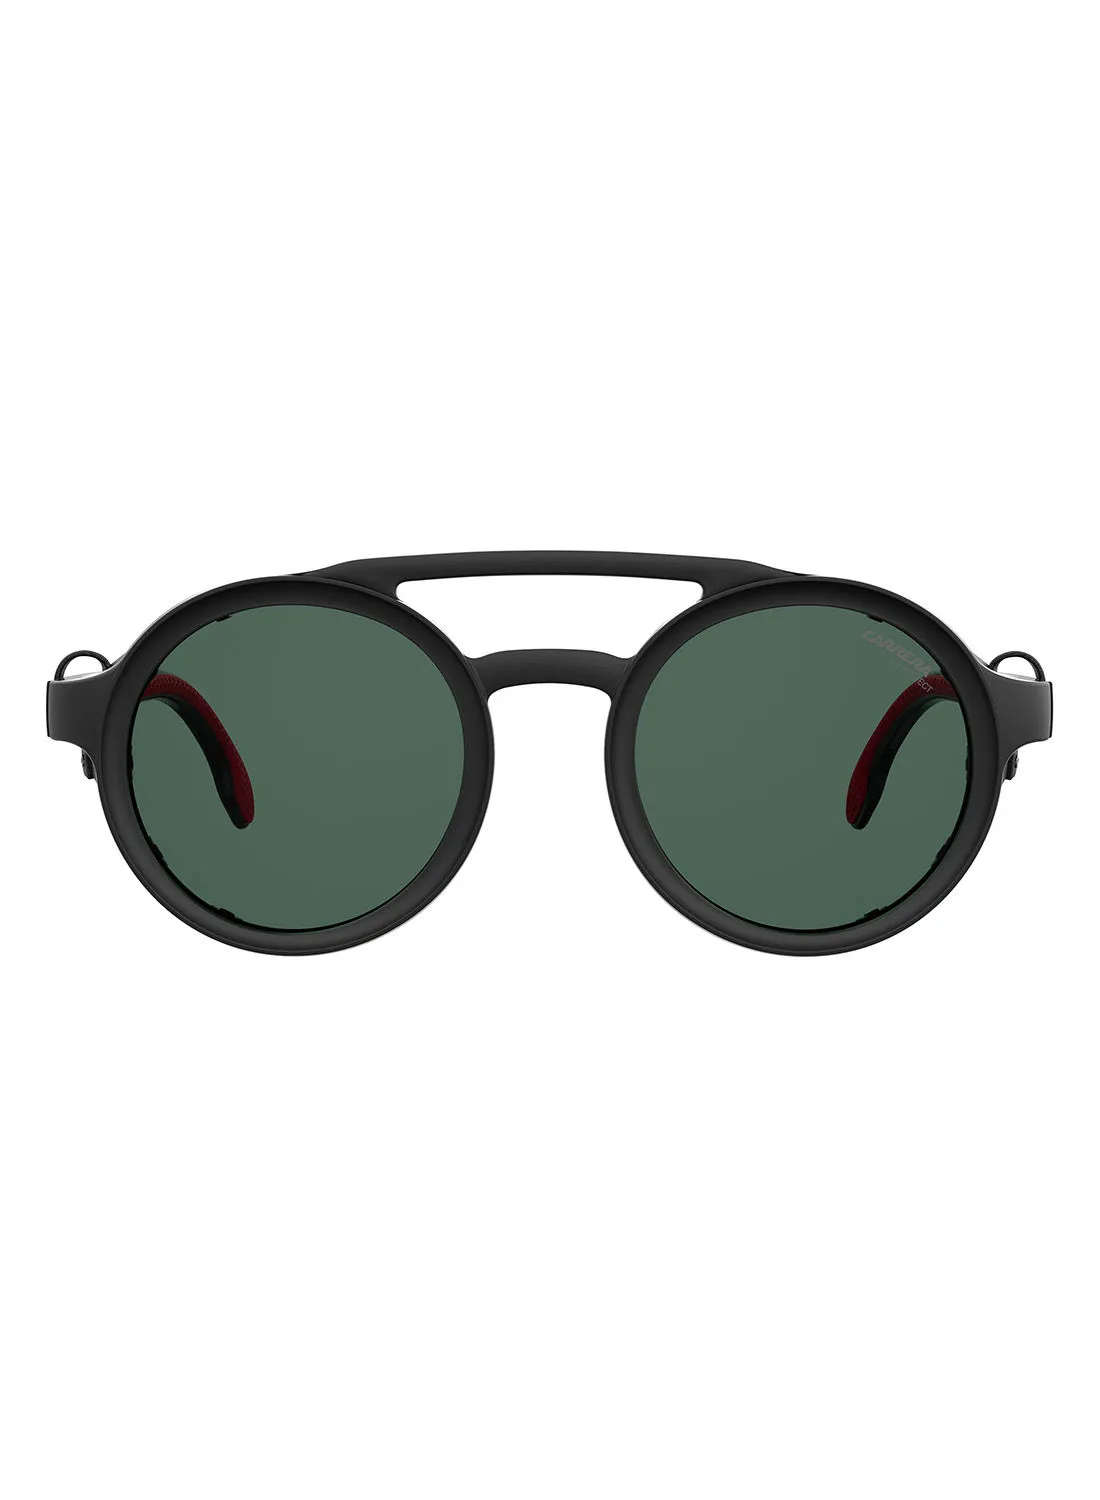 Carrera Round Sunglasses - Lens Size : 49 mm